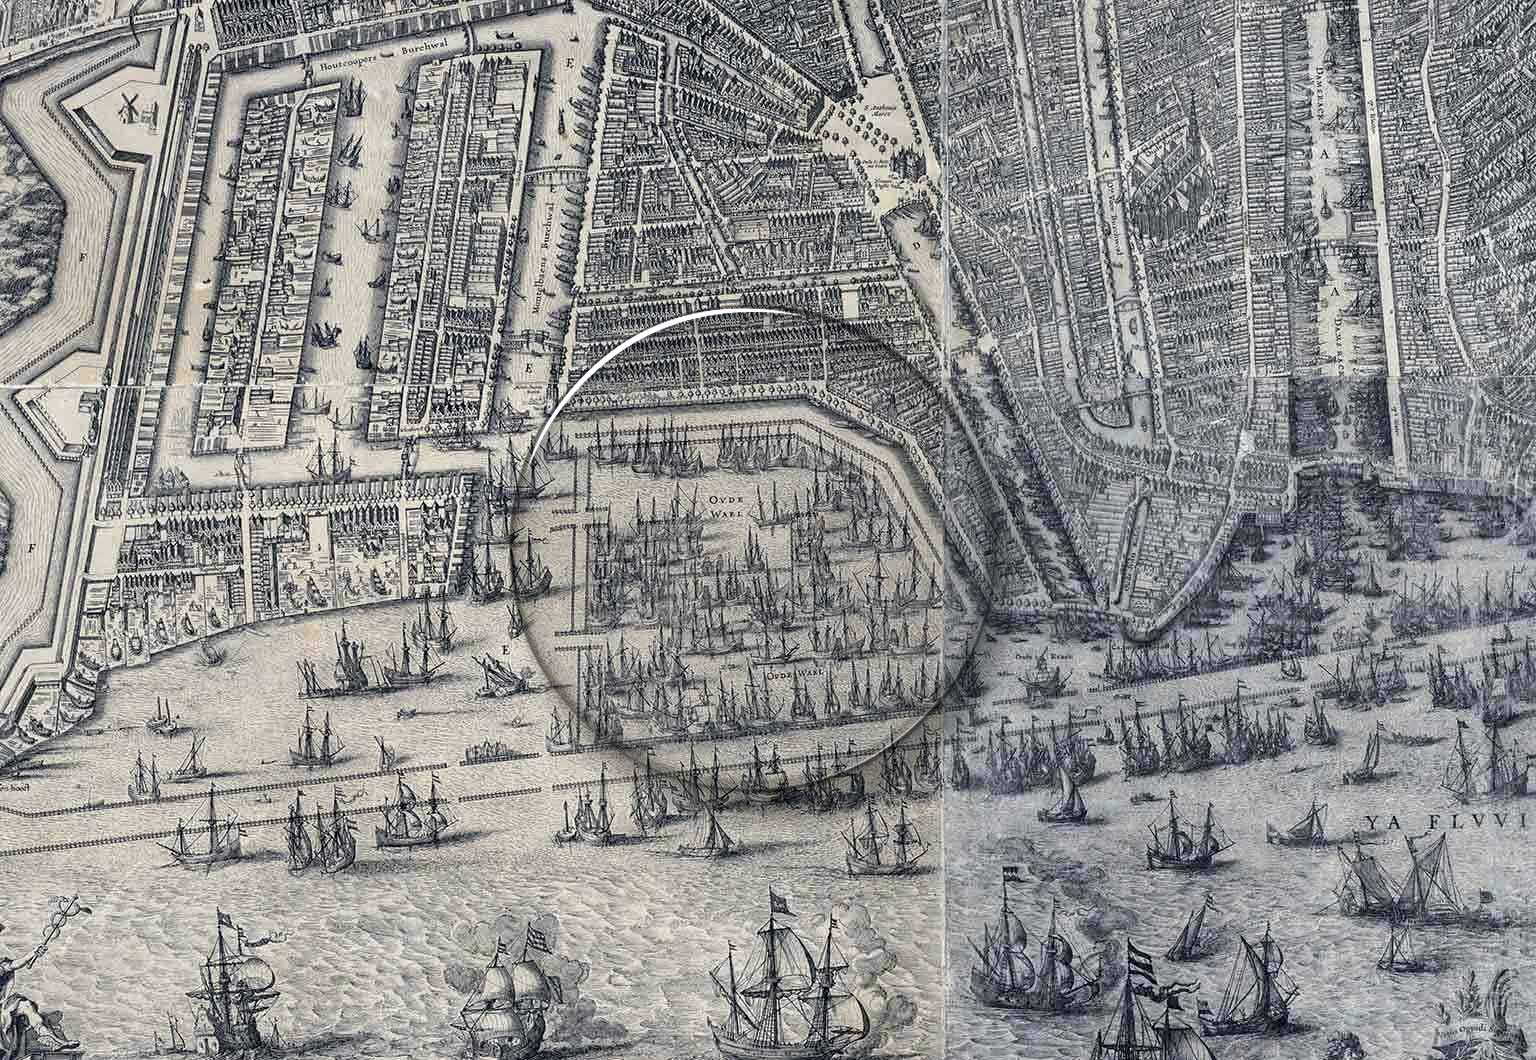 Oude Waal, Amsterdam, in 1625, detail of a map by Balthasar Florisz van Berckenrode